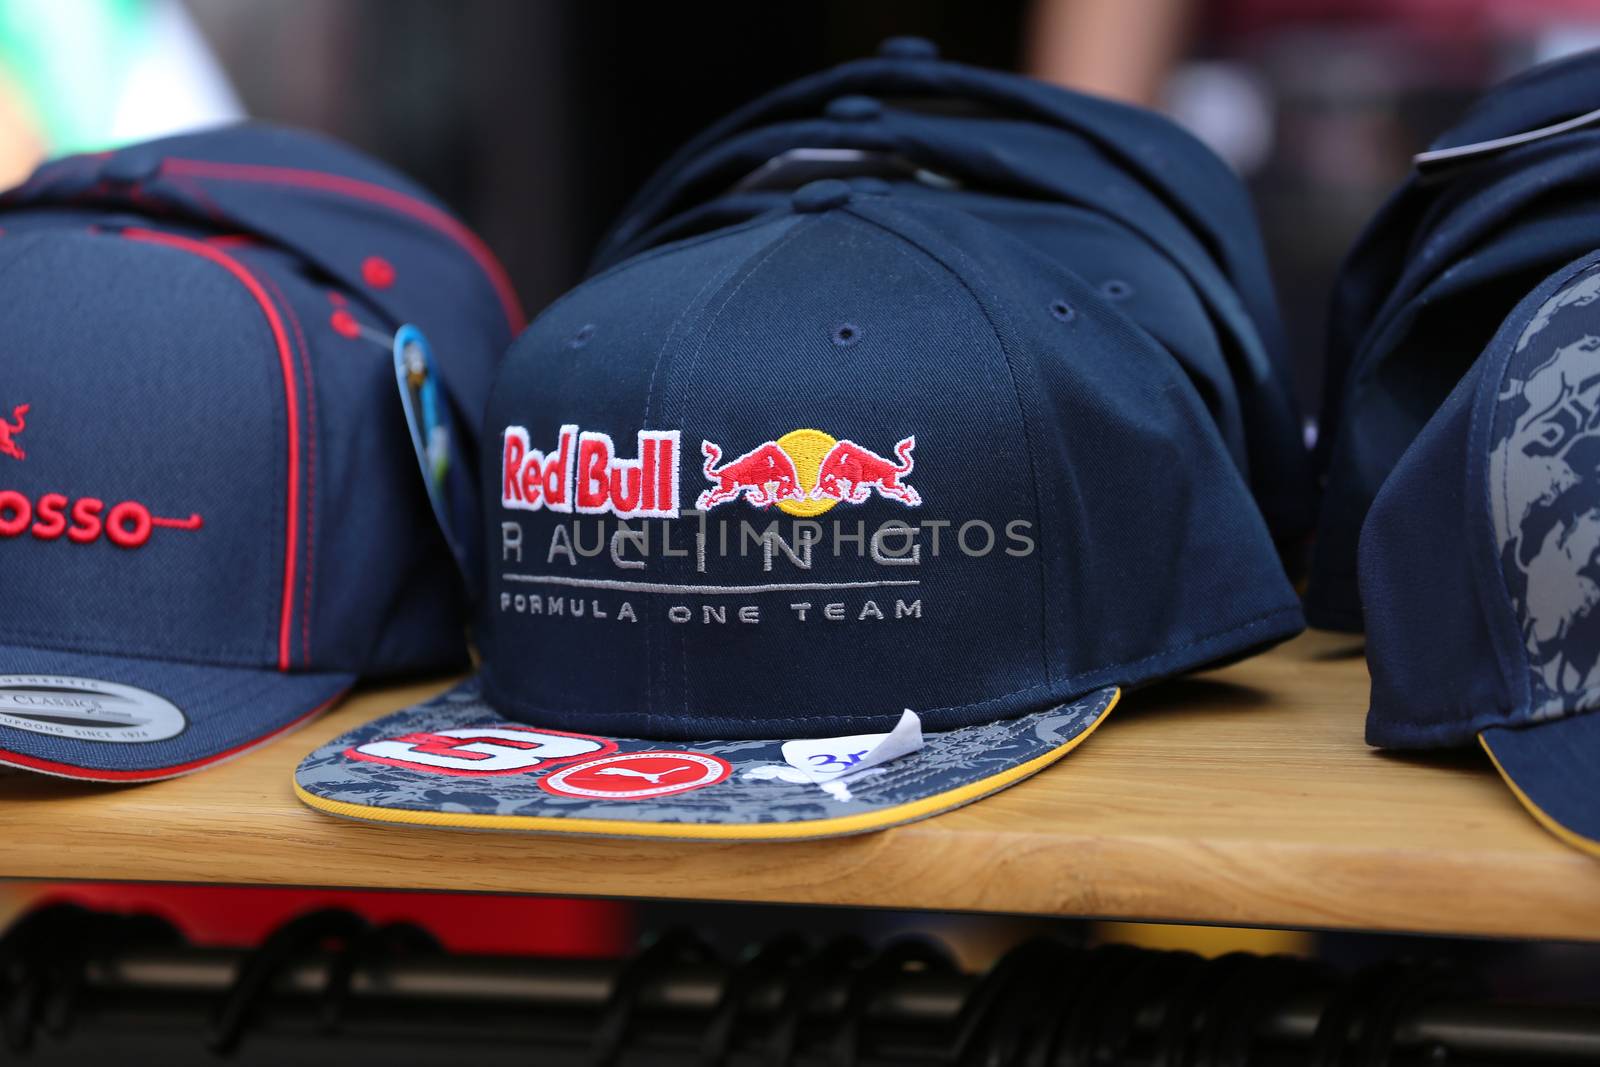 Monte-Carlo, Monaco - May 28, 2016: Red Bull Racing Formula One Team Cap For Sale During the Monaco Formula 1 Grand Prix 2016
